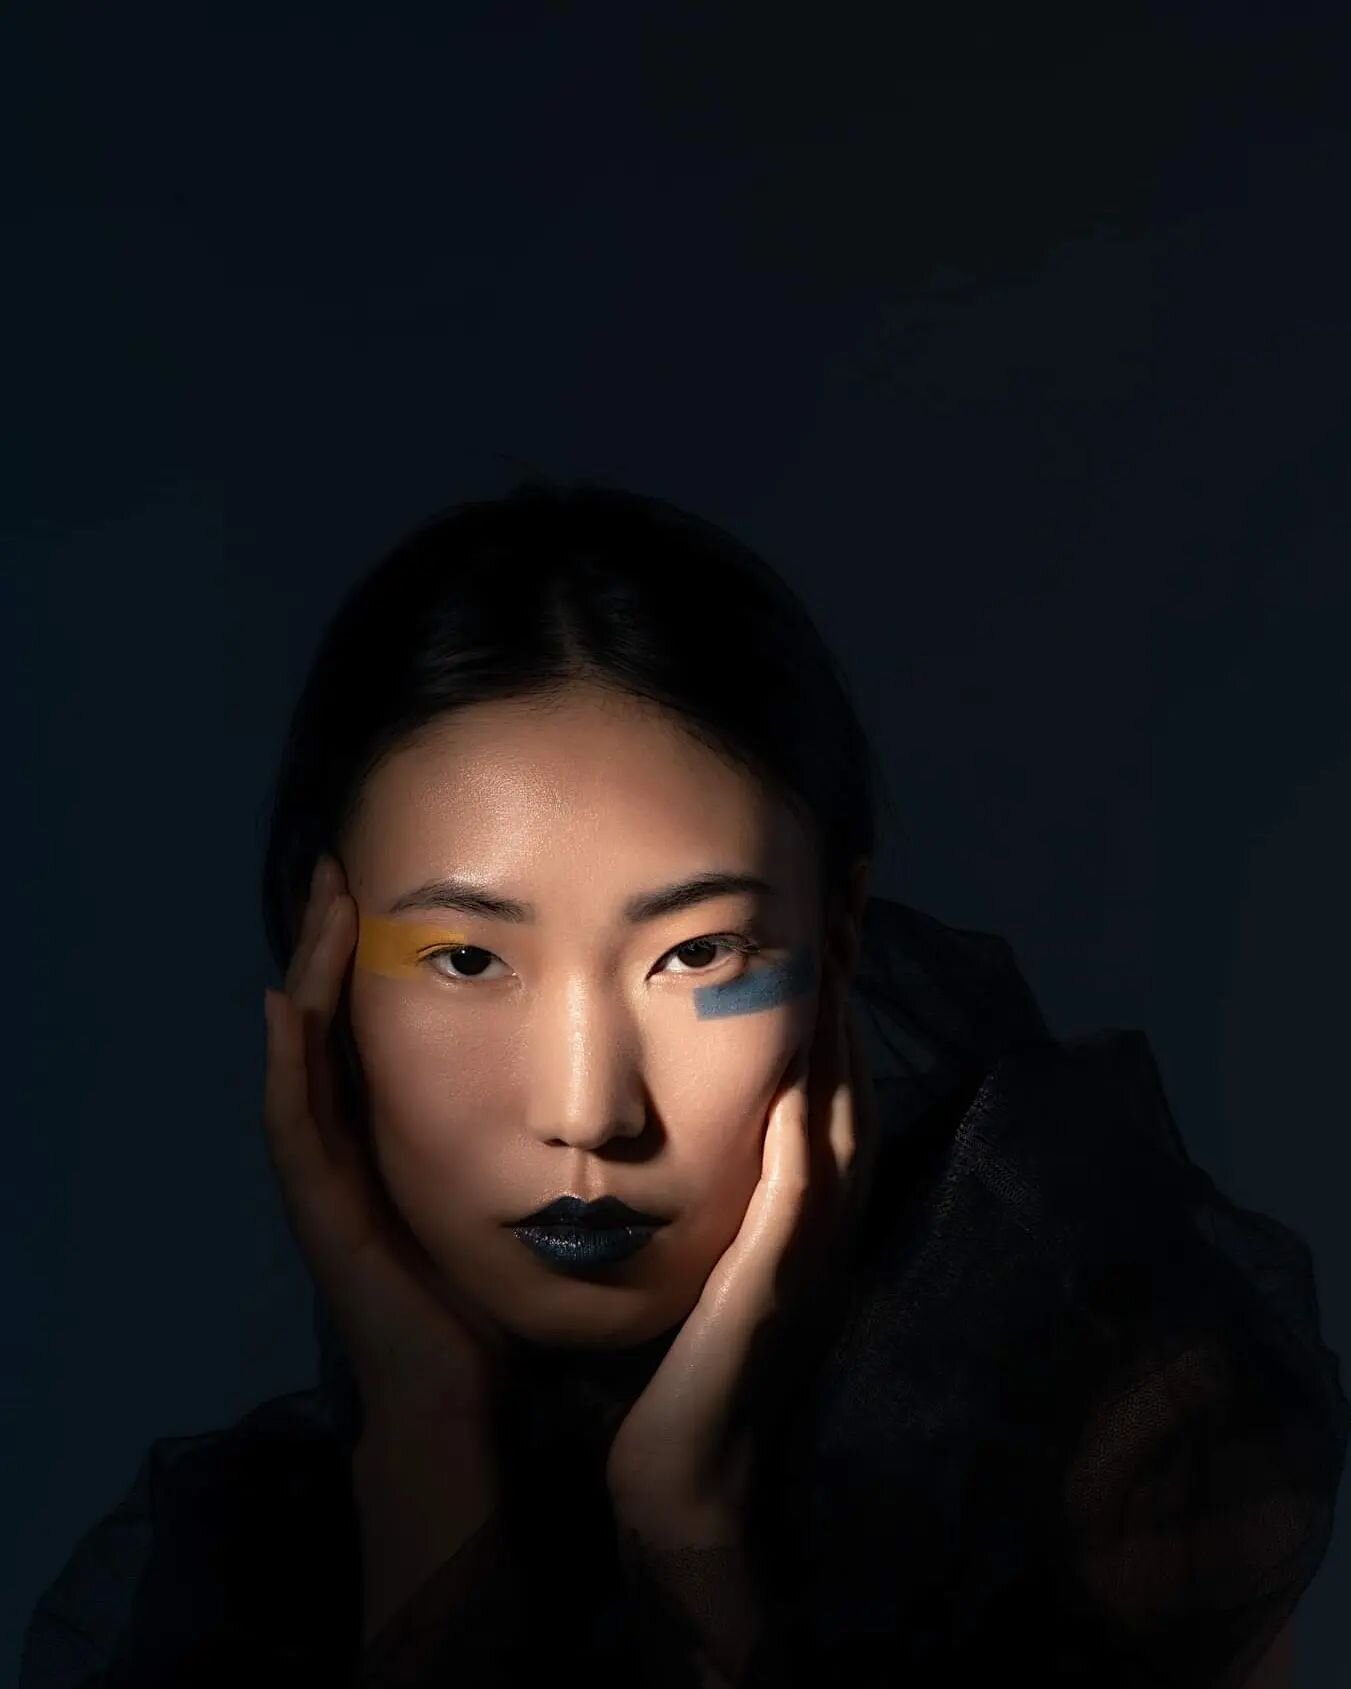 The final from uni
'Sticks and Blocks' series 

Photographer - Me
Model - @cherry_bbq 
MUA - @cmlh__makeup @cmlh__creative 
-
-
-
-
-
#photo #photography #photographer #photobook #Model #modeling #makeup #makeupartist #mua #minimalism #minimalismphot